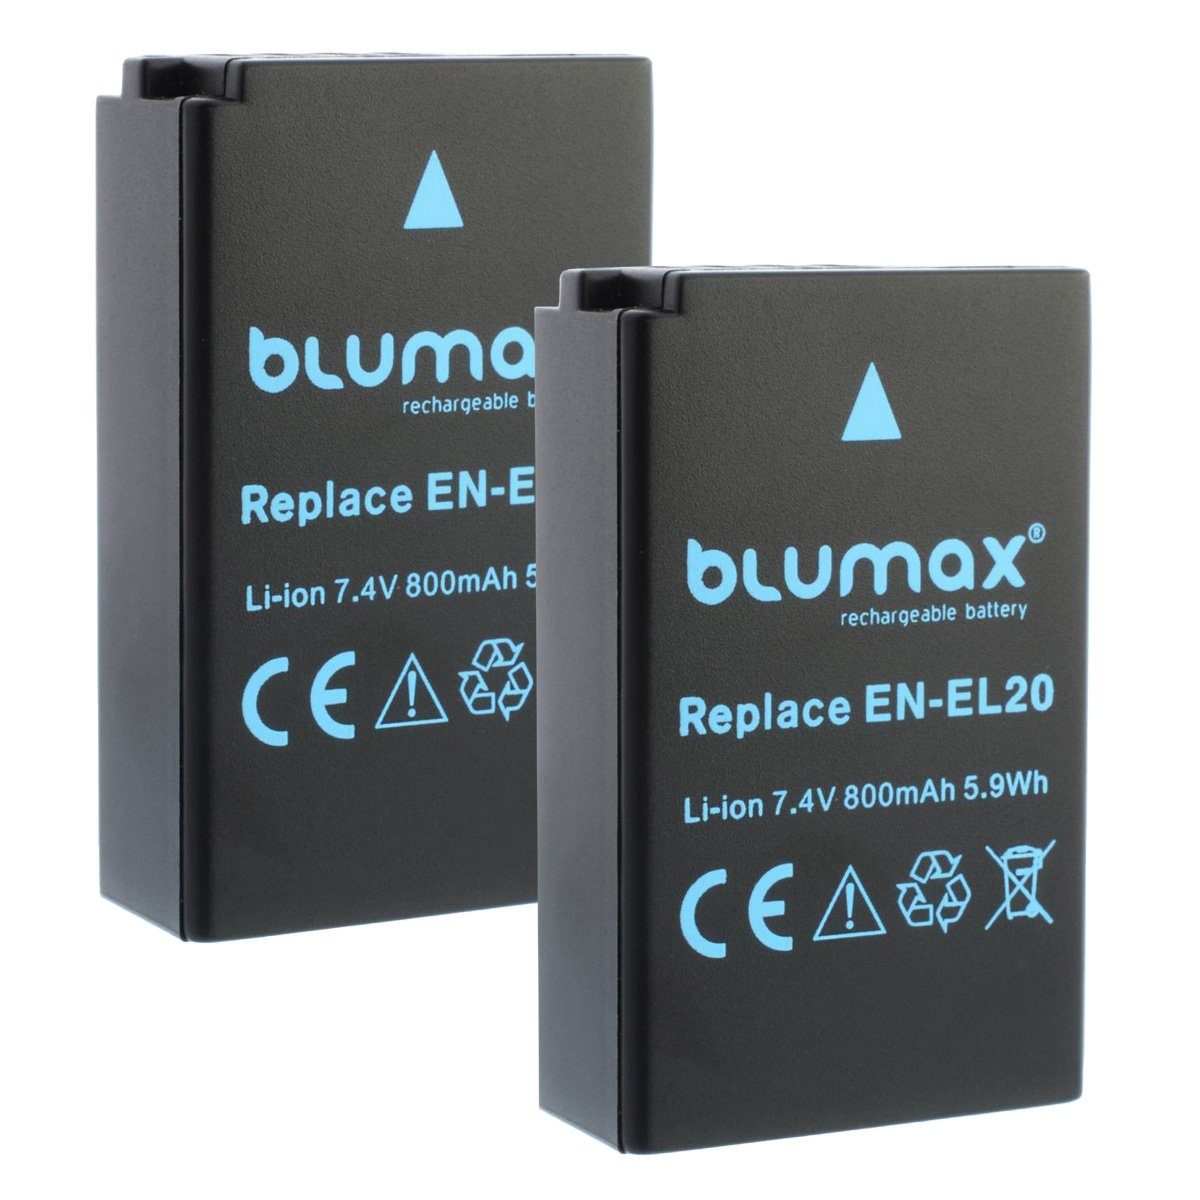 Blumax 2x EN-EL20,1 J1, 1 J2, 1 J3, 1 S1, 800 mAh Kamera-Akku